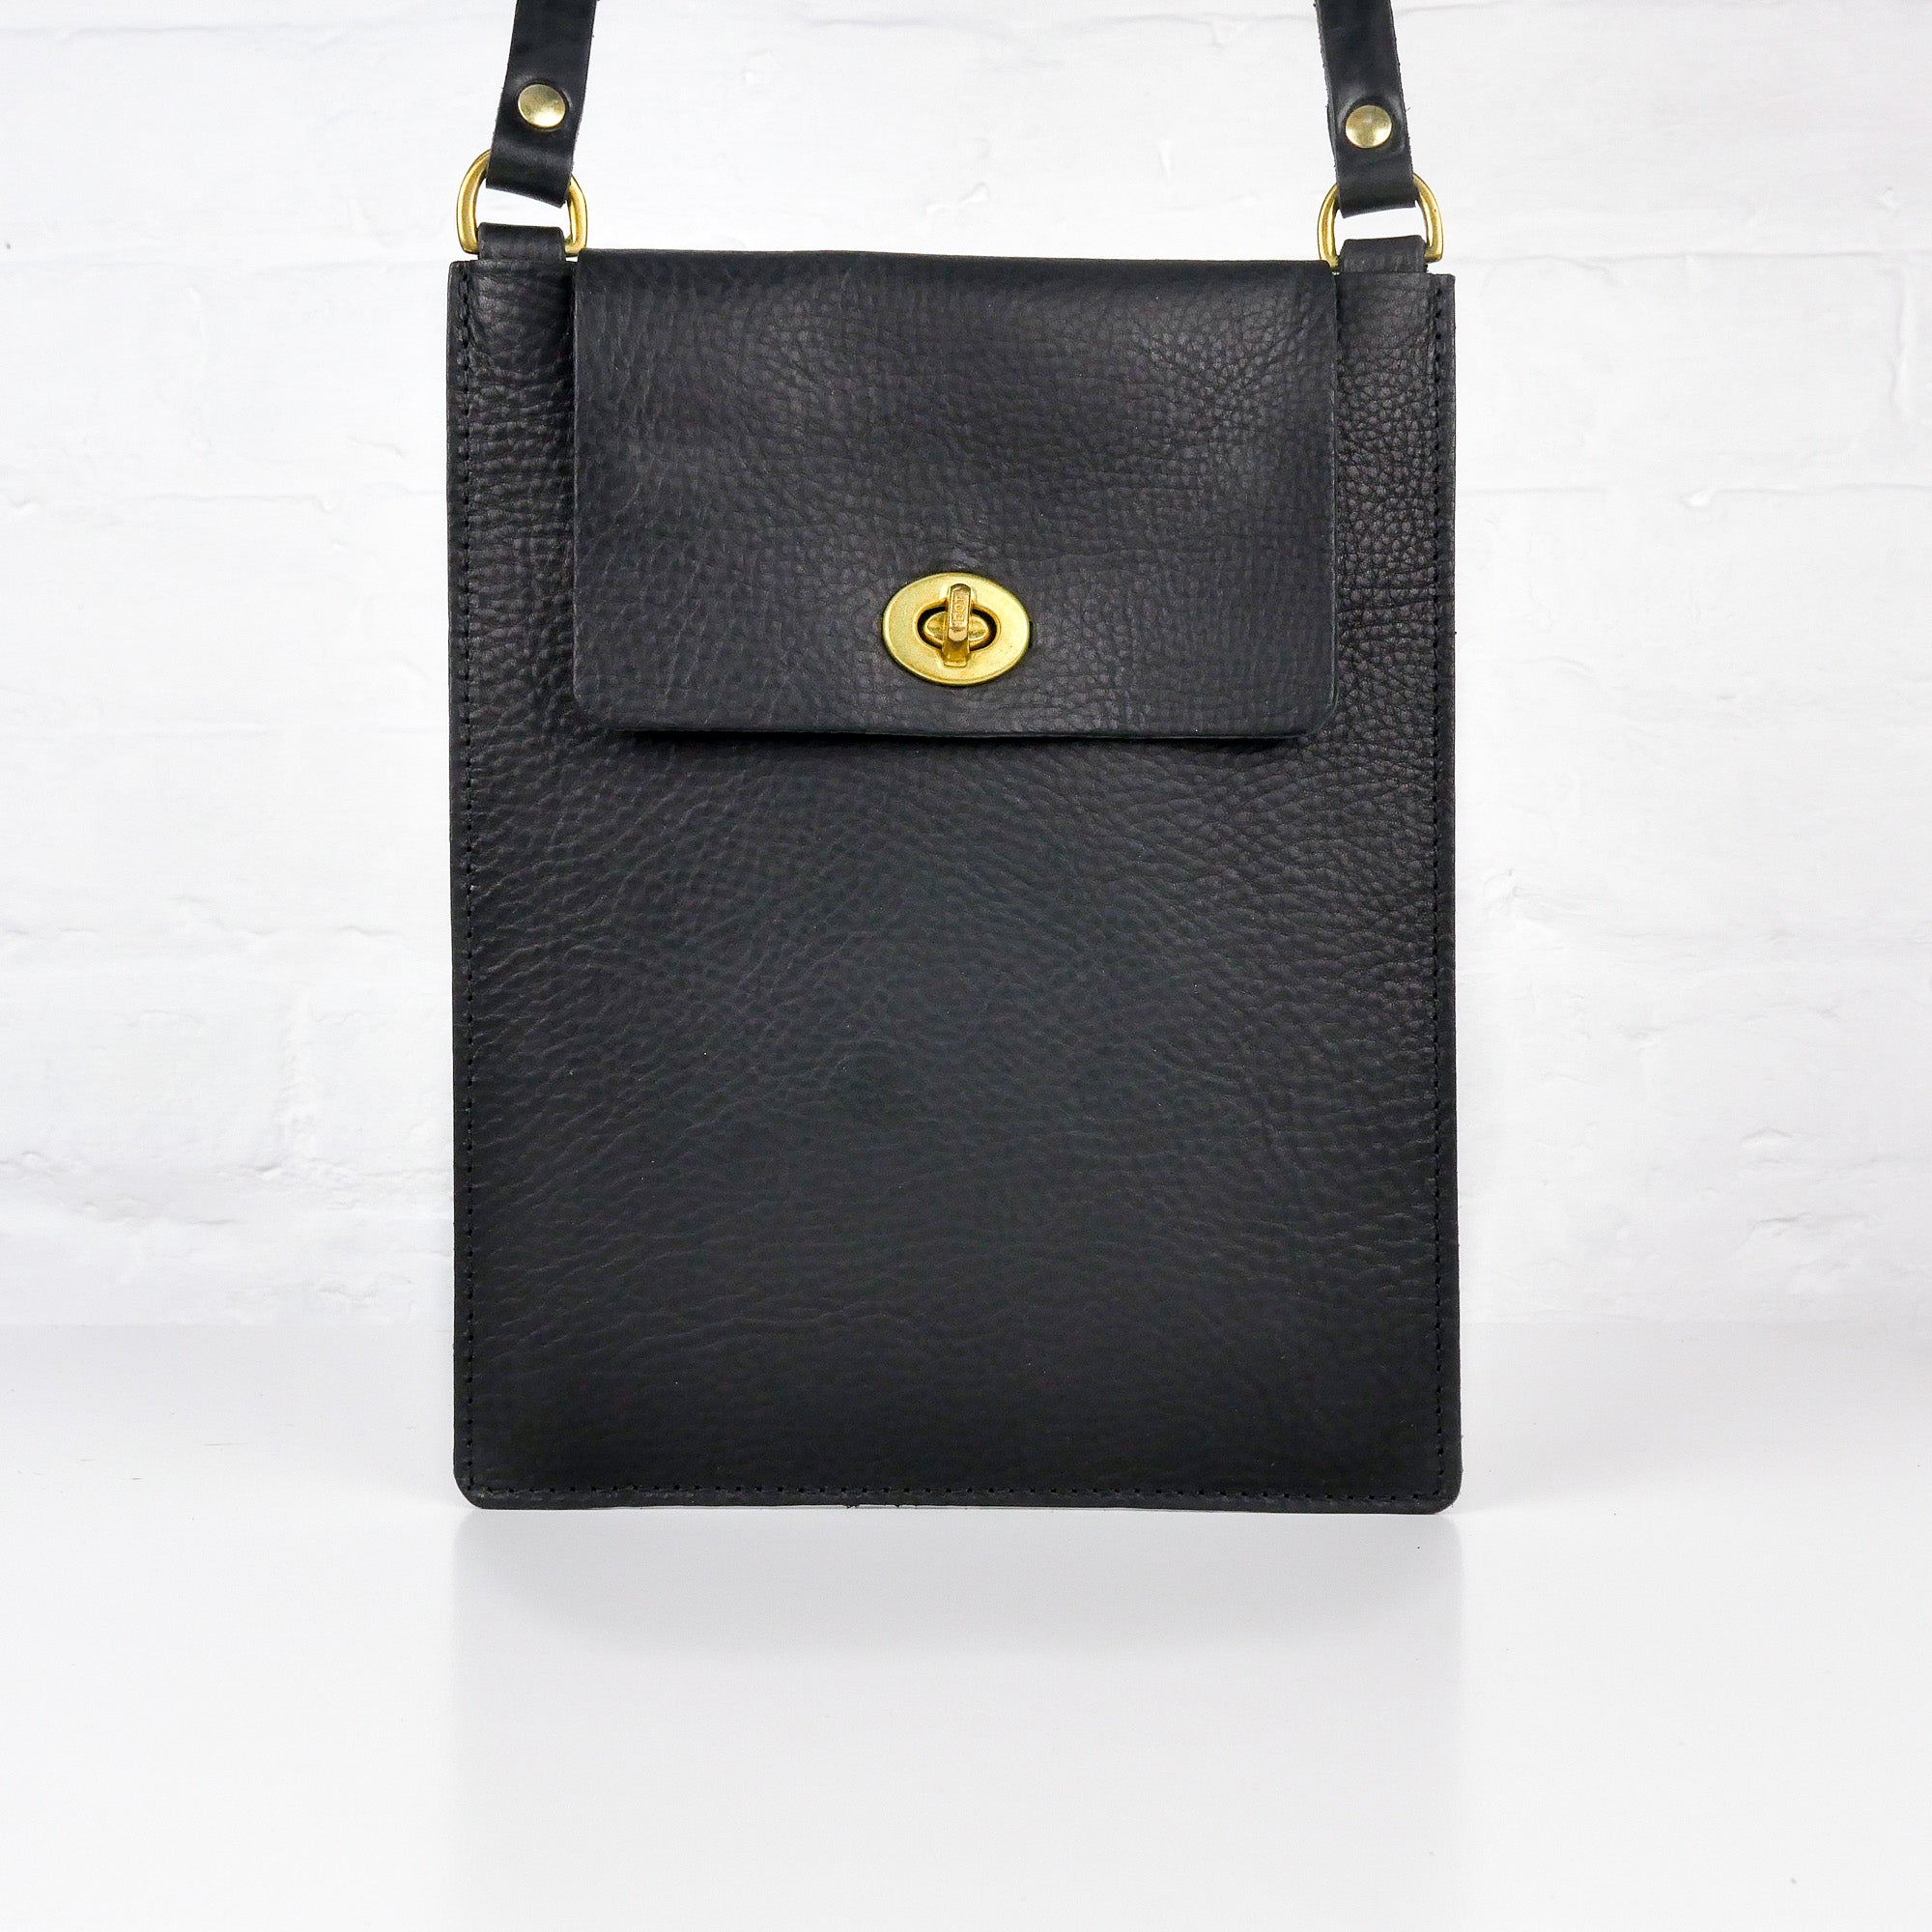 Flat Black Leather Turnlock Bag